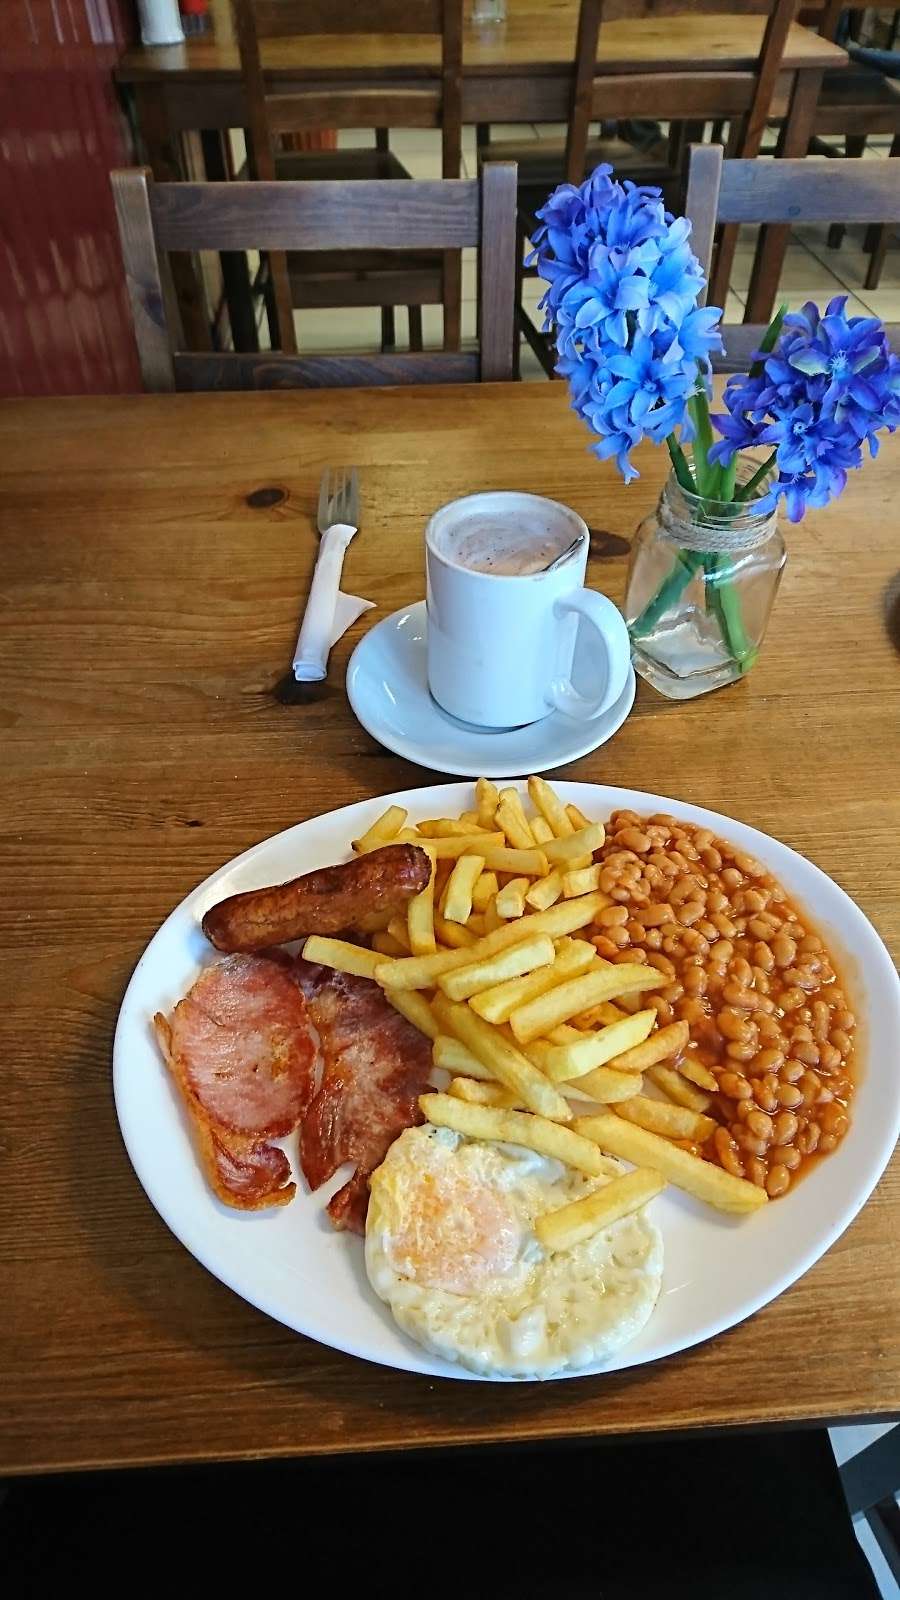 Crave Breakfast and Lunch Ltd | 247A Lewisham Way, London SE4 1XF, UK | Phone: 020 8469 0609